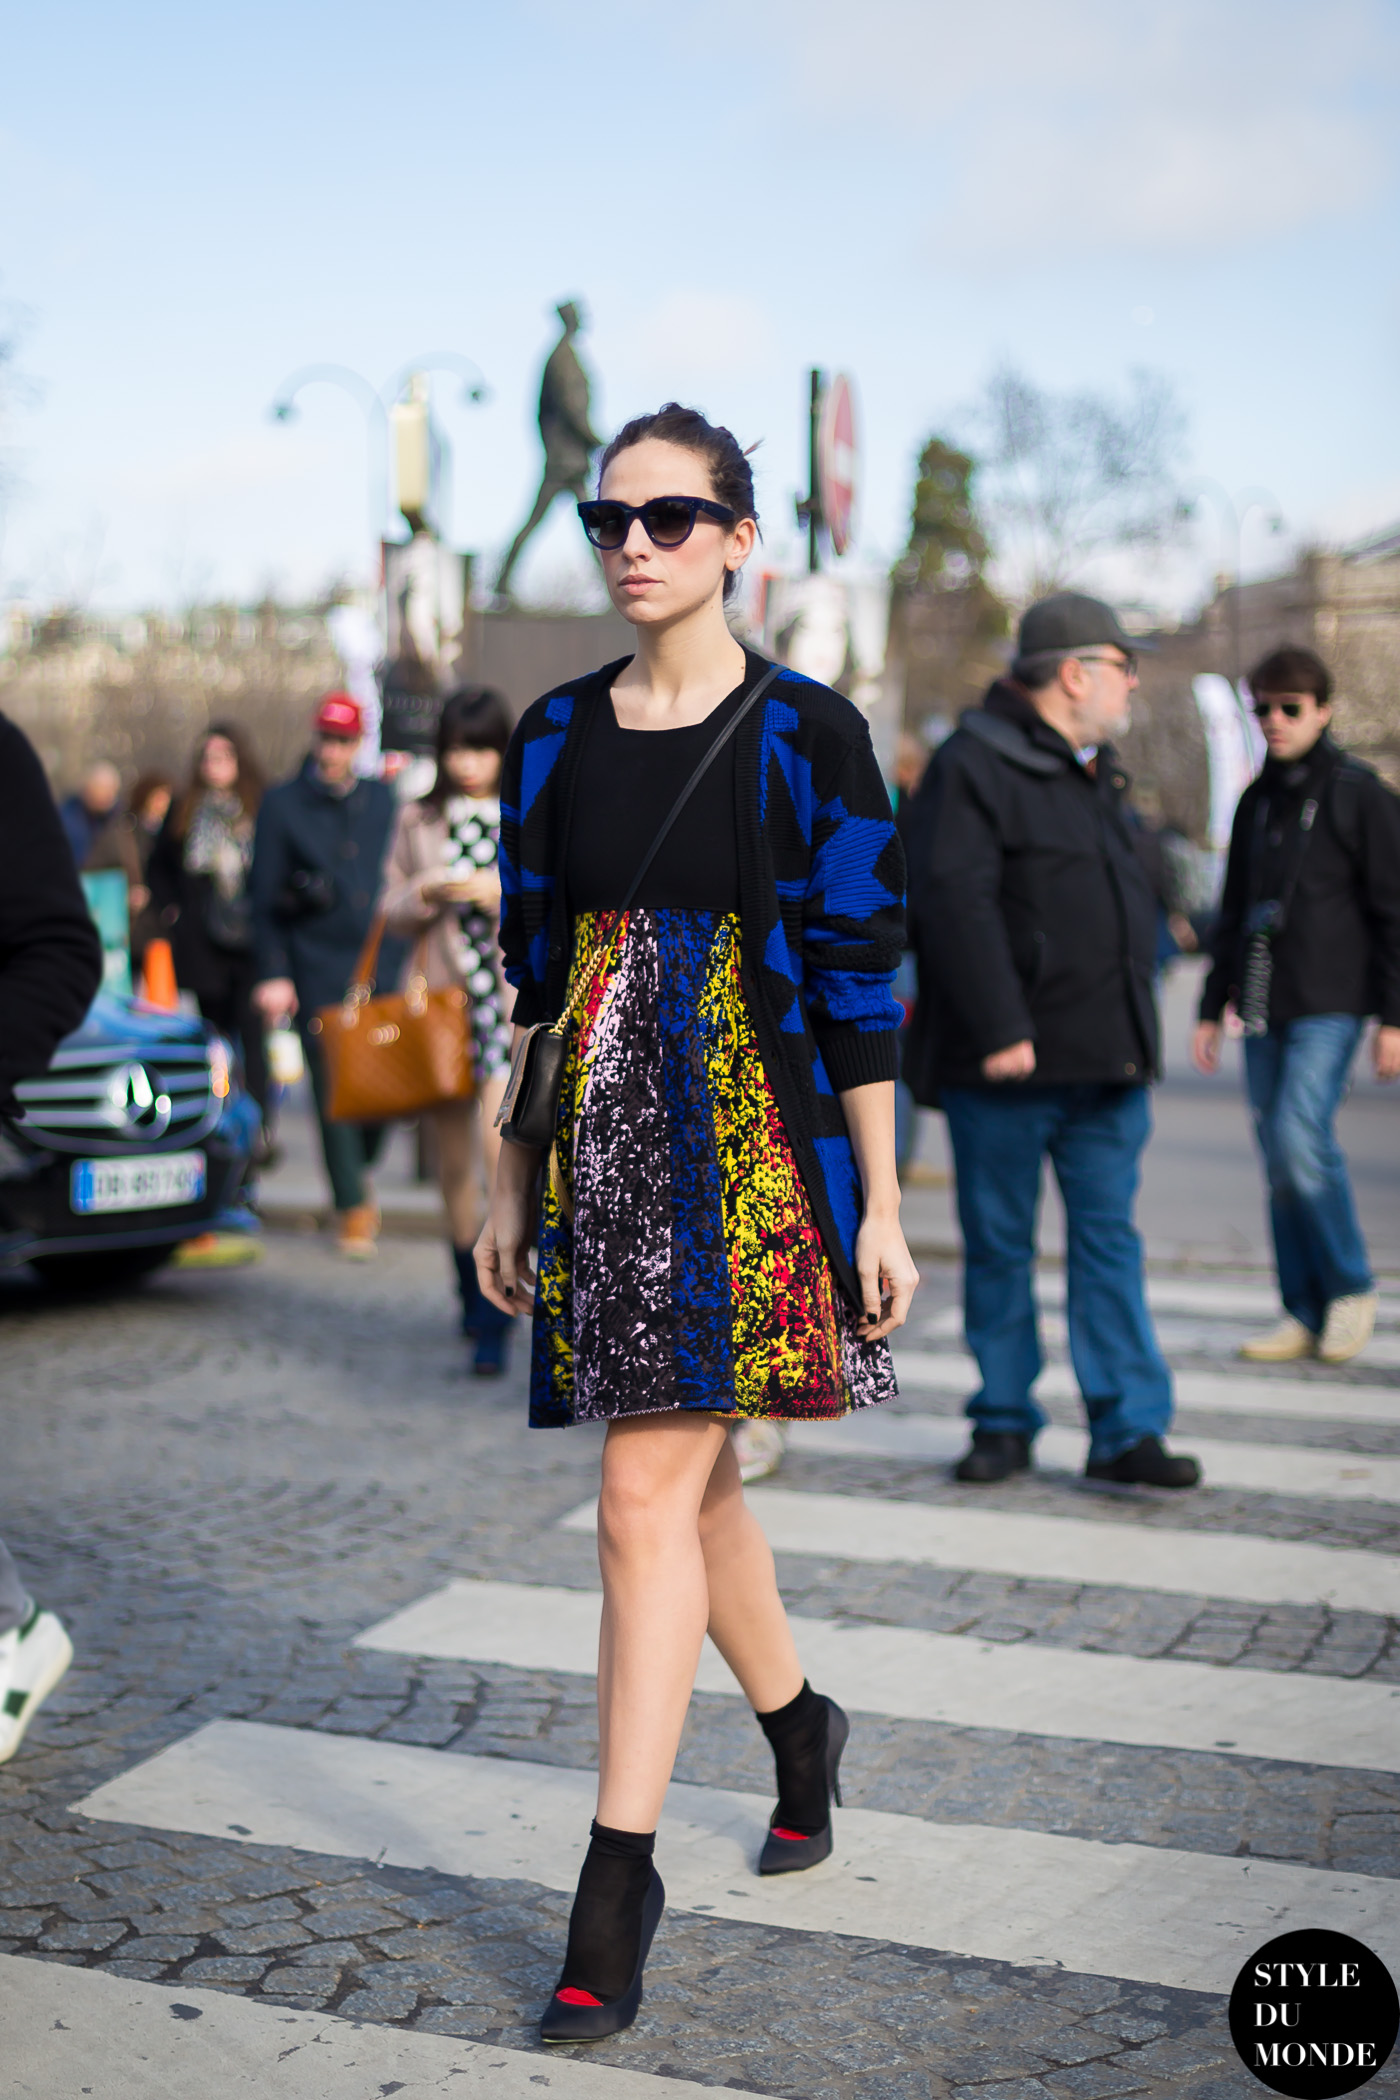 Paris Fashion Week FW 2014 Street Style: Erika Boldrin - STYLE DU MONDE ...